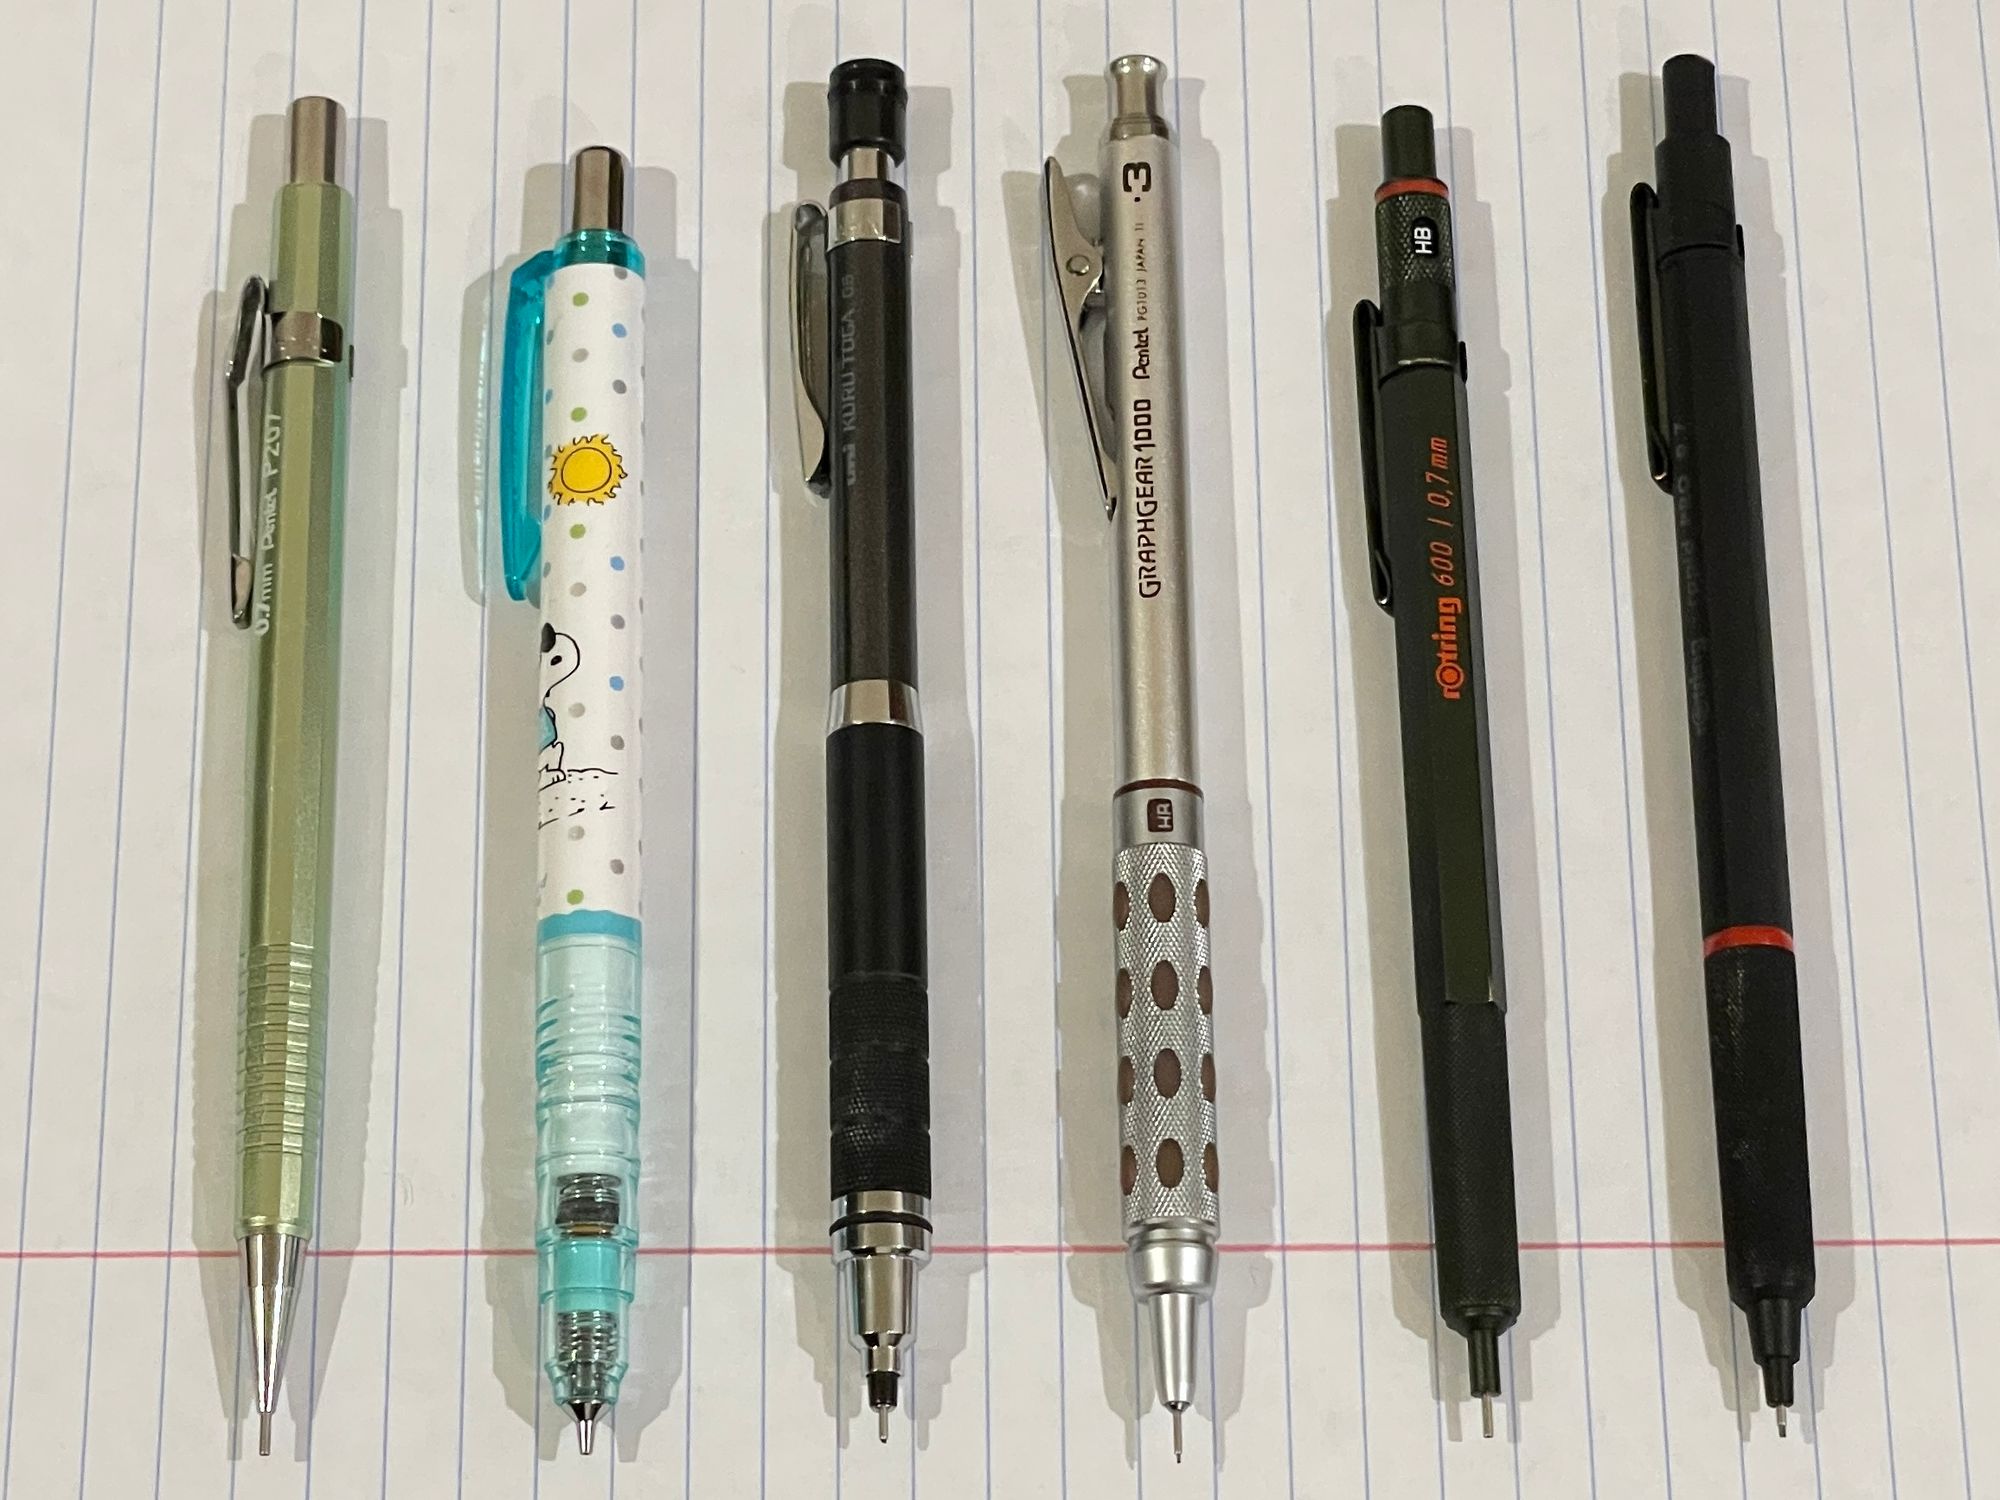 Review: The Uni Kuru Toga Roulette Mechanical Pencil